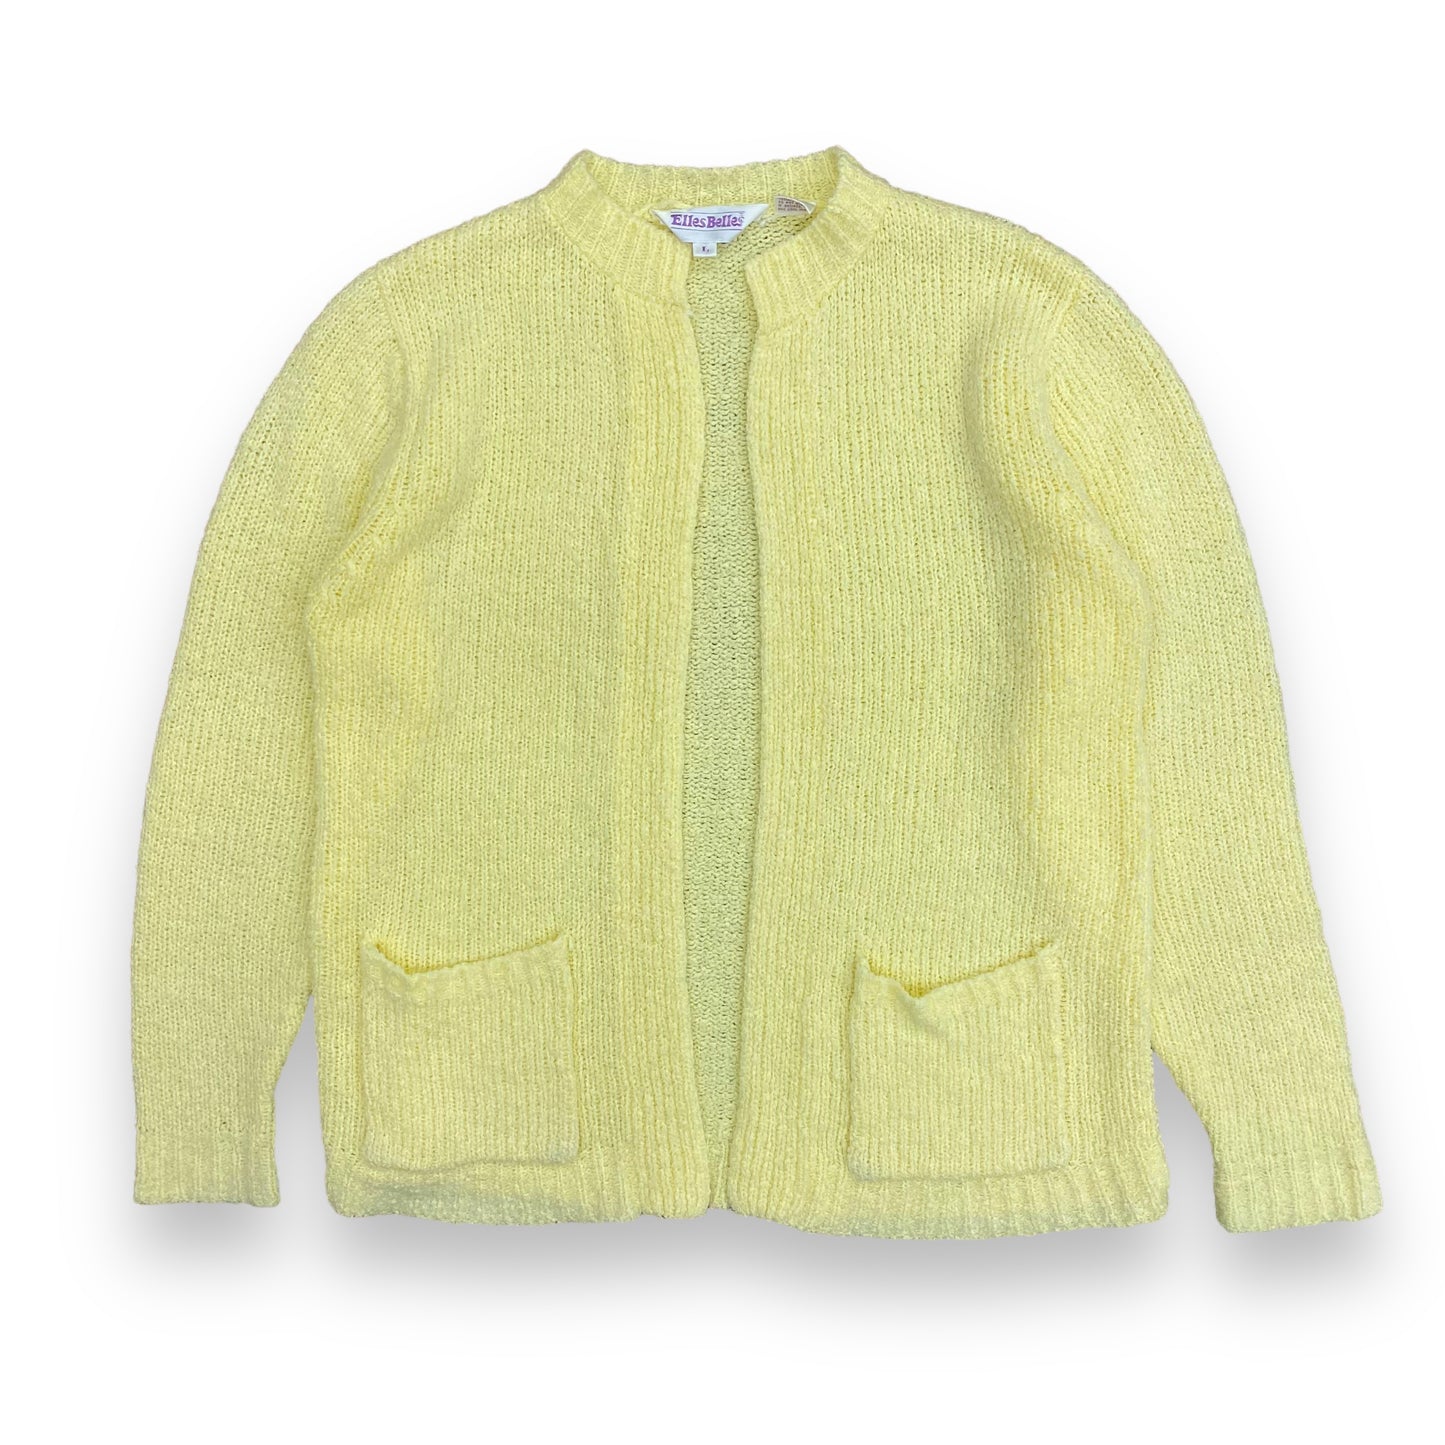 Vintage Light Yellow Knit Cardigan Sweater - Size Large